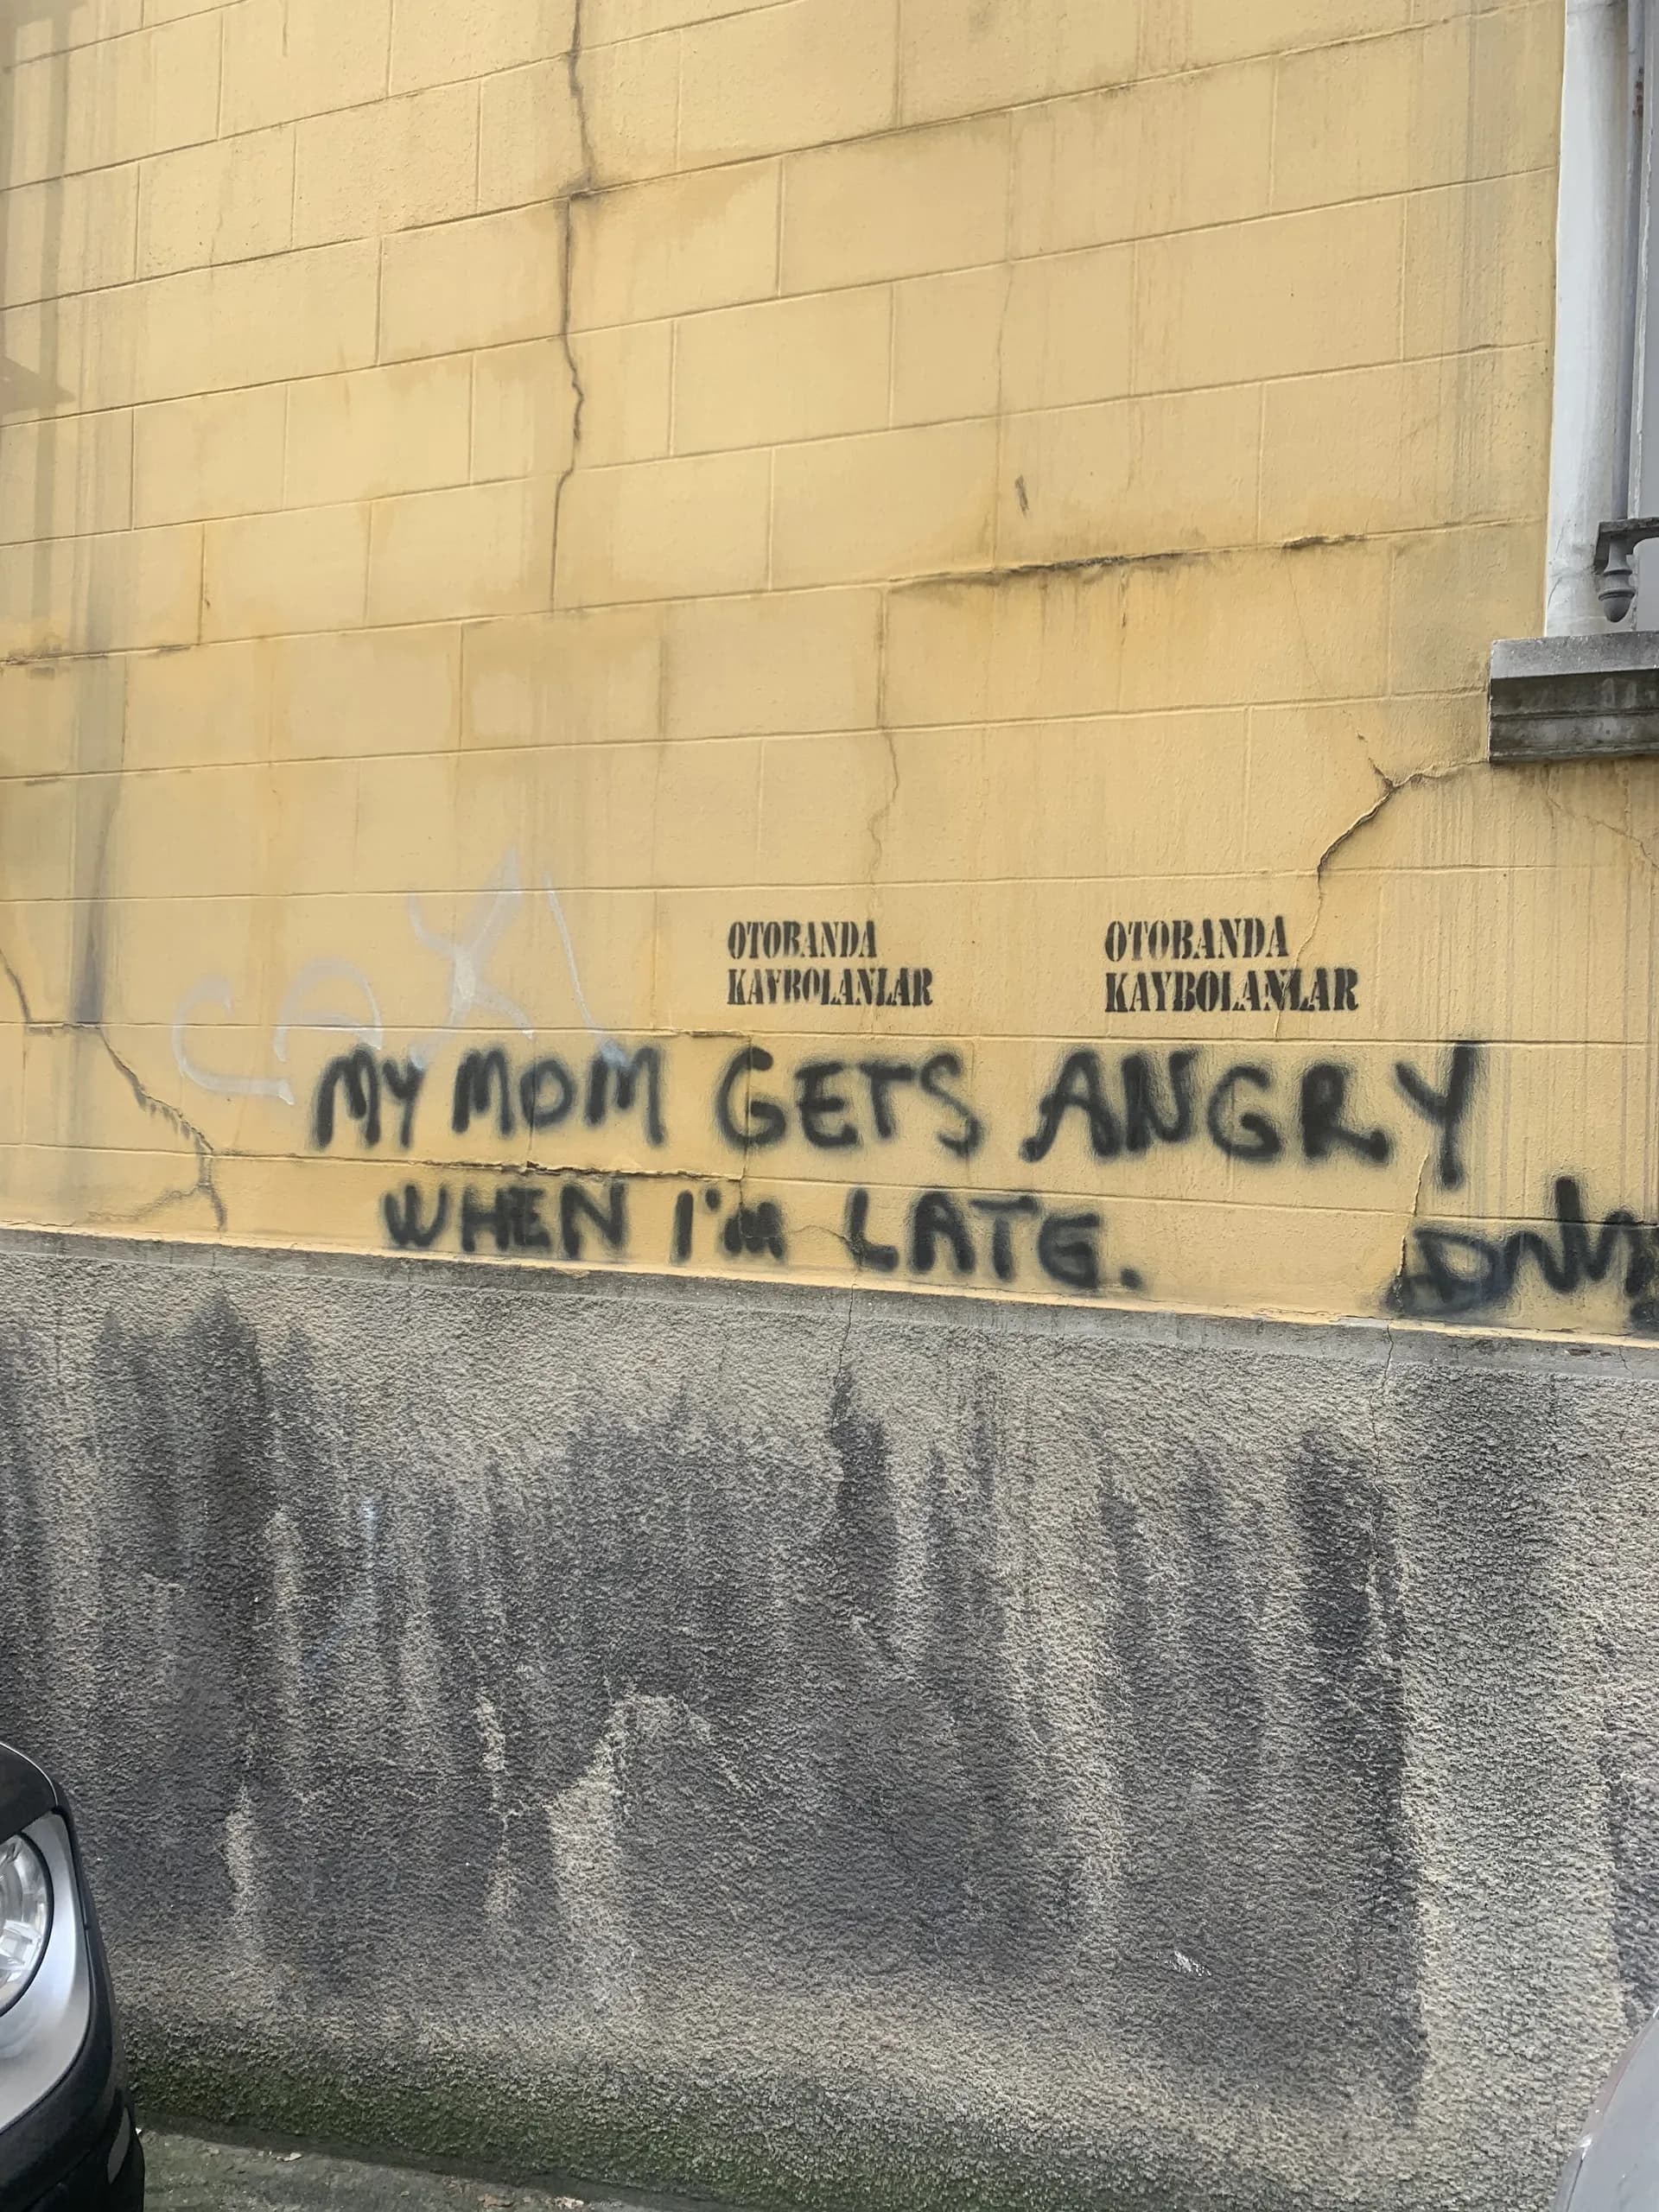 Graffiti in Istanbul, Turkey. Source: Eugene Yiu Nam Cheung